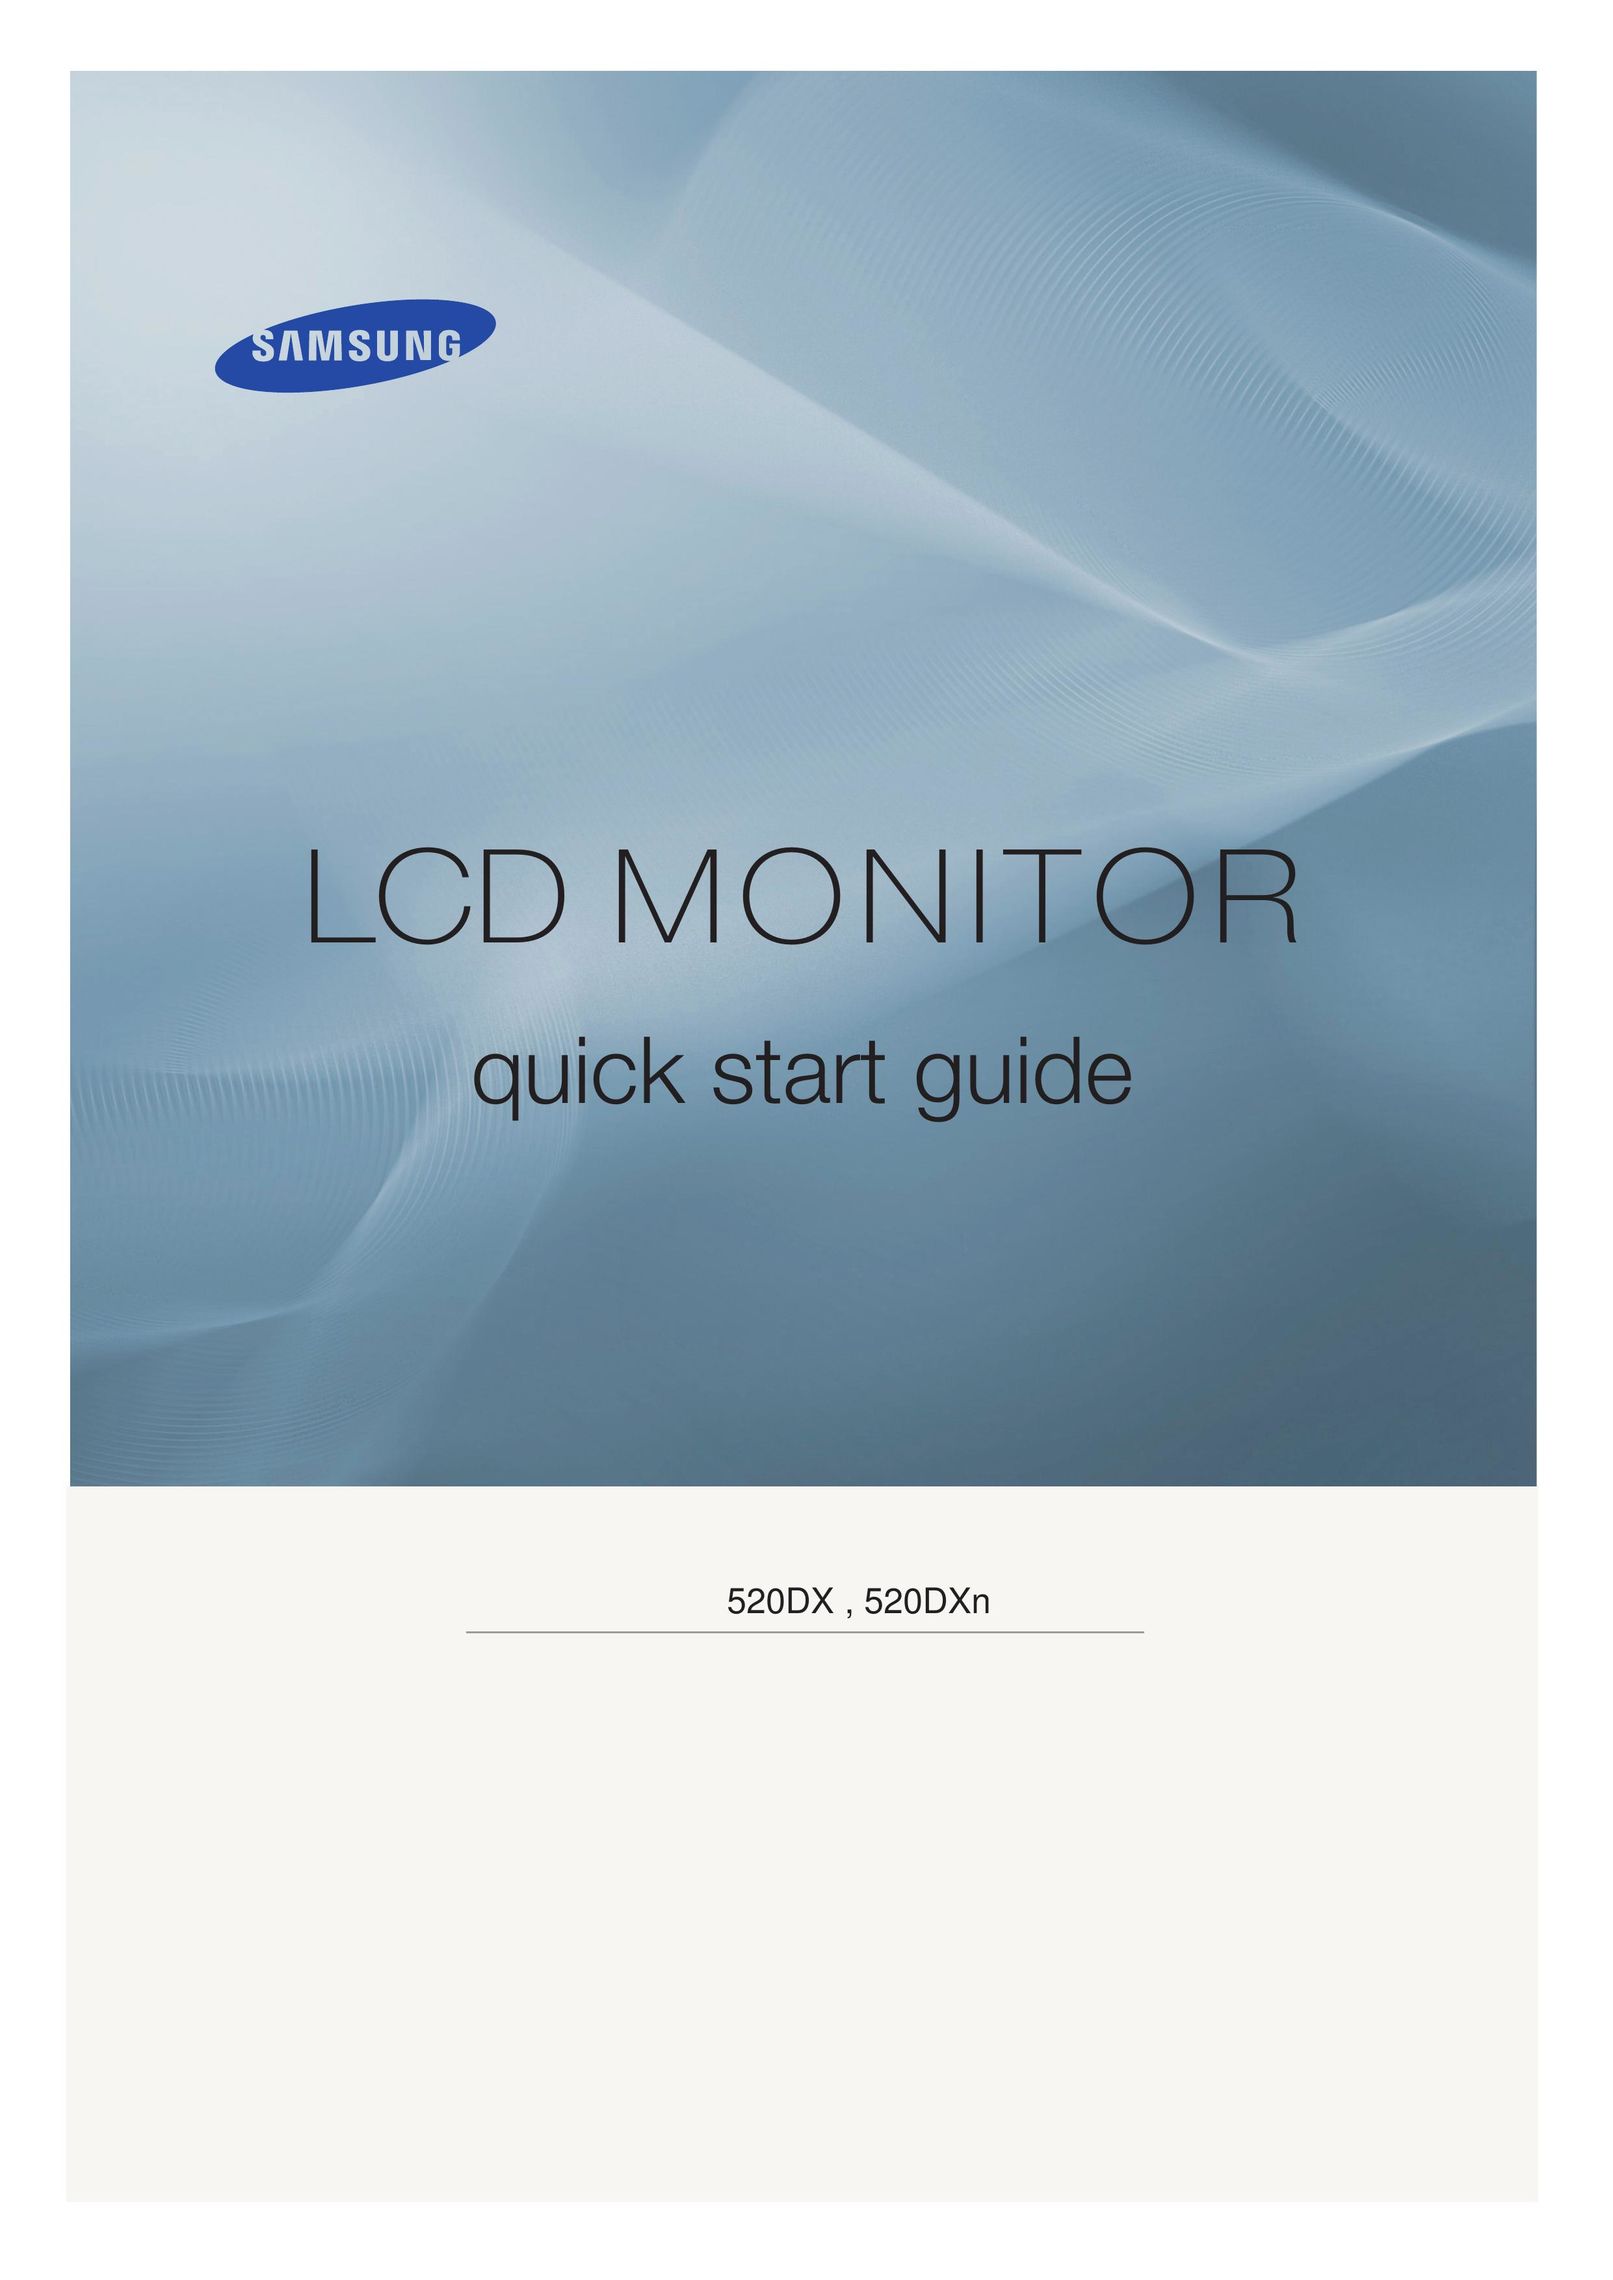 Samsung 520DXN CD Player User Manual